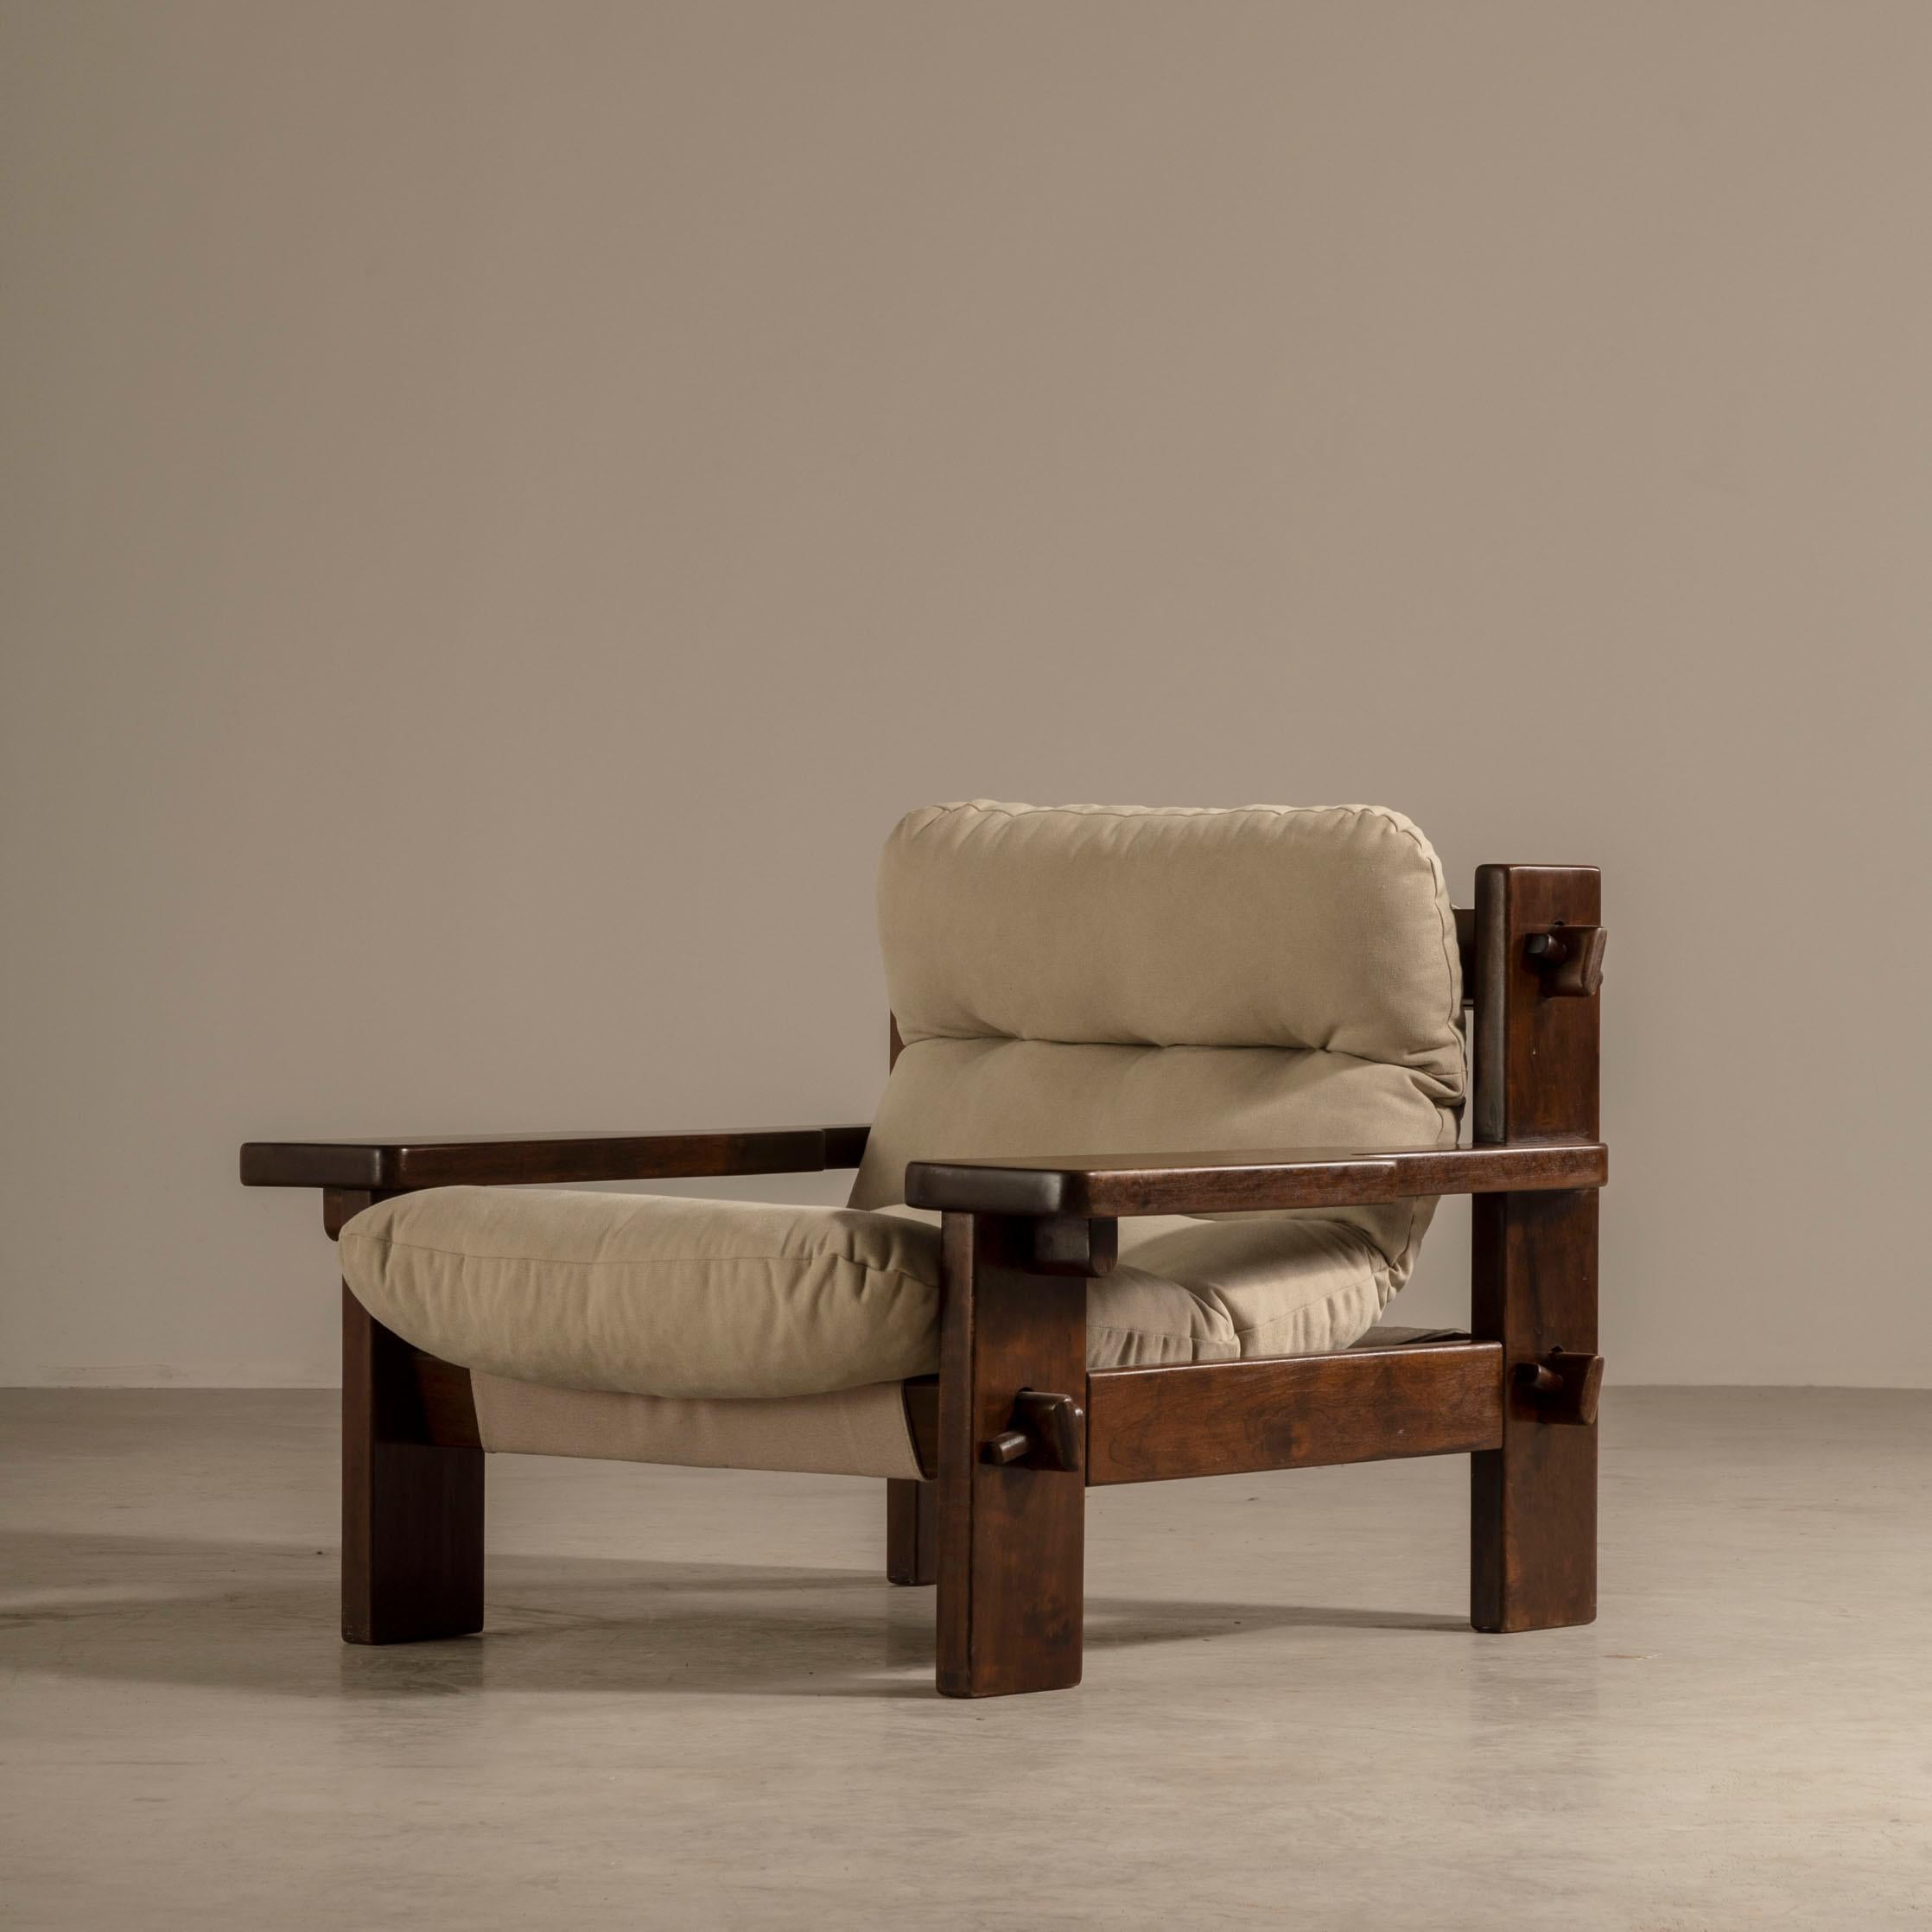 20th Century Lounge Chairs by Jean Gillon in Hardwood, Brazilian Midcentury Modern Design